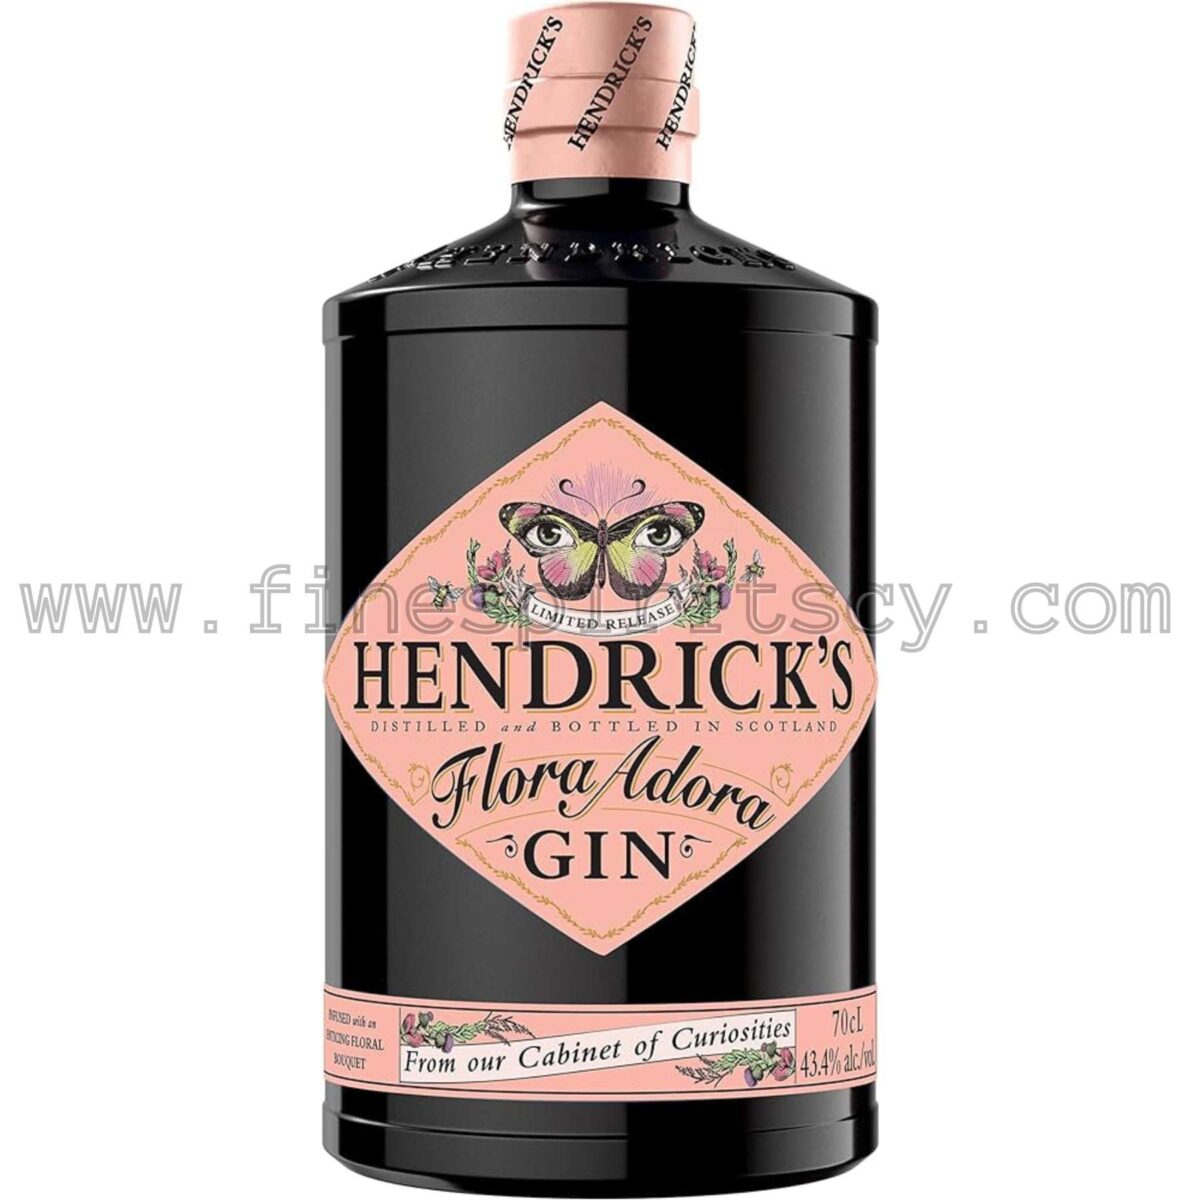 Hendricks Flora Adora Gin Cyprus Price Order online 700ml 70cl 0.7L Limited Edition